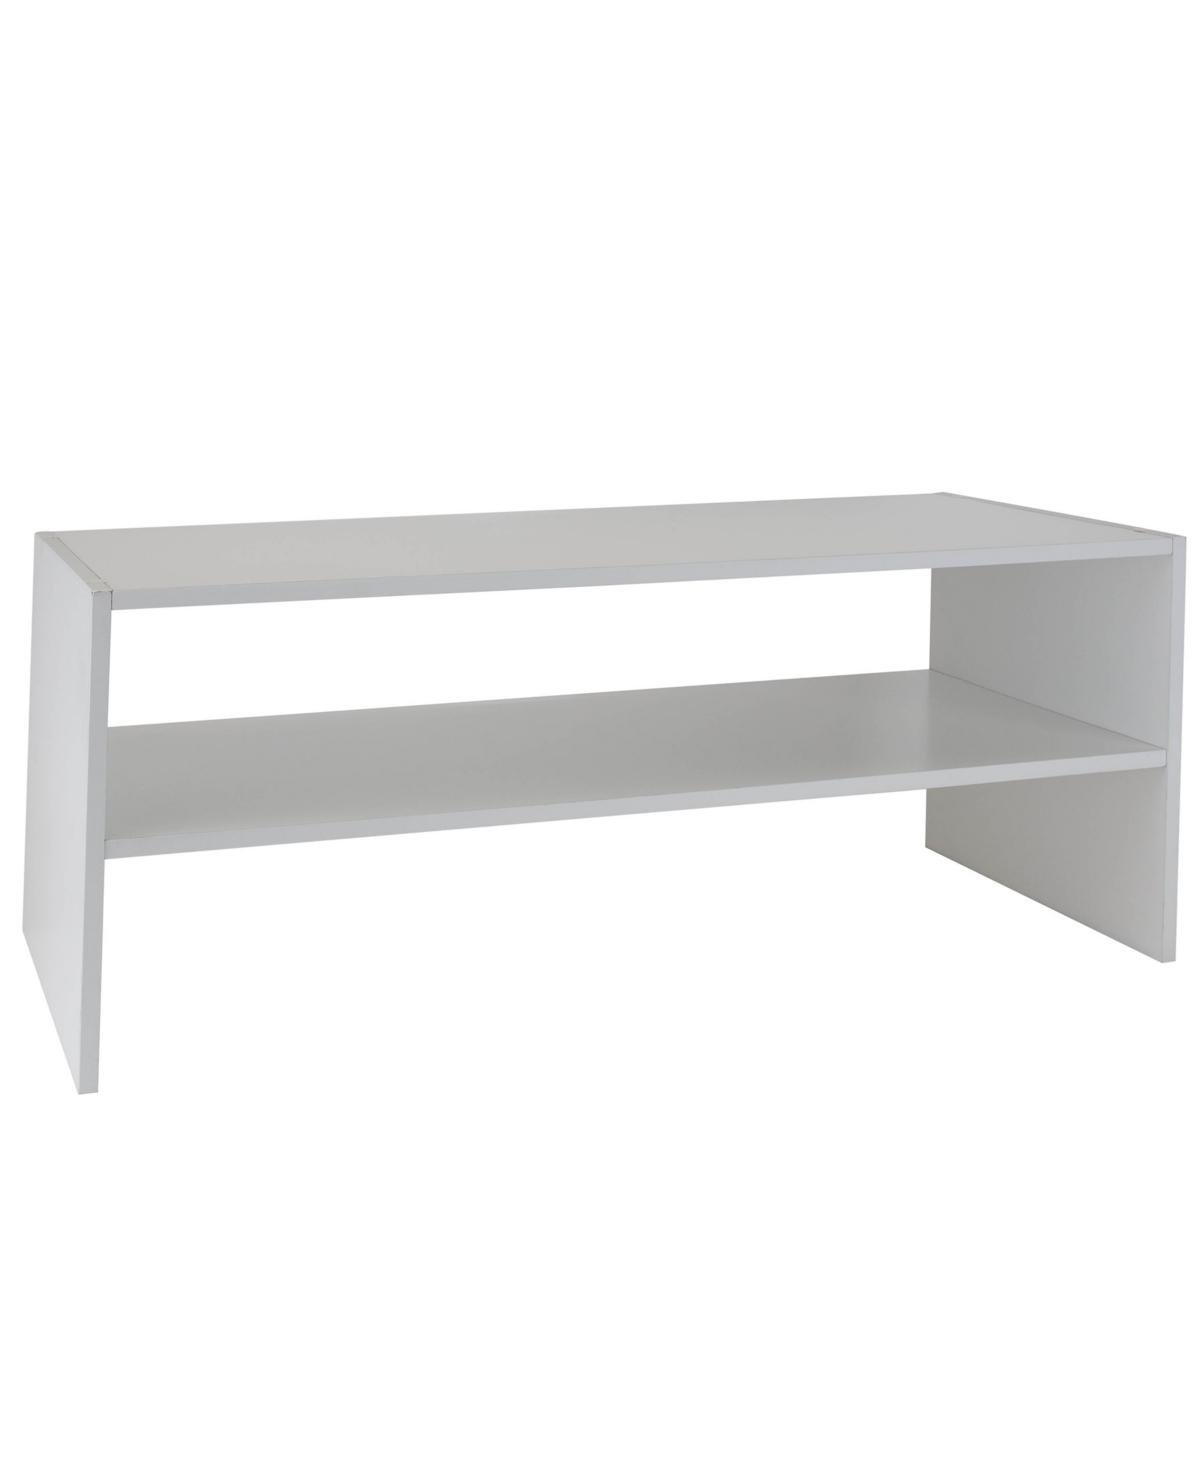 2 Shelf Stackable Shoe Rack in White - White